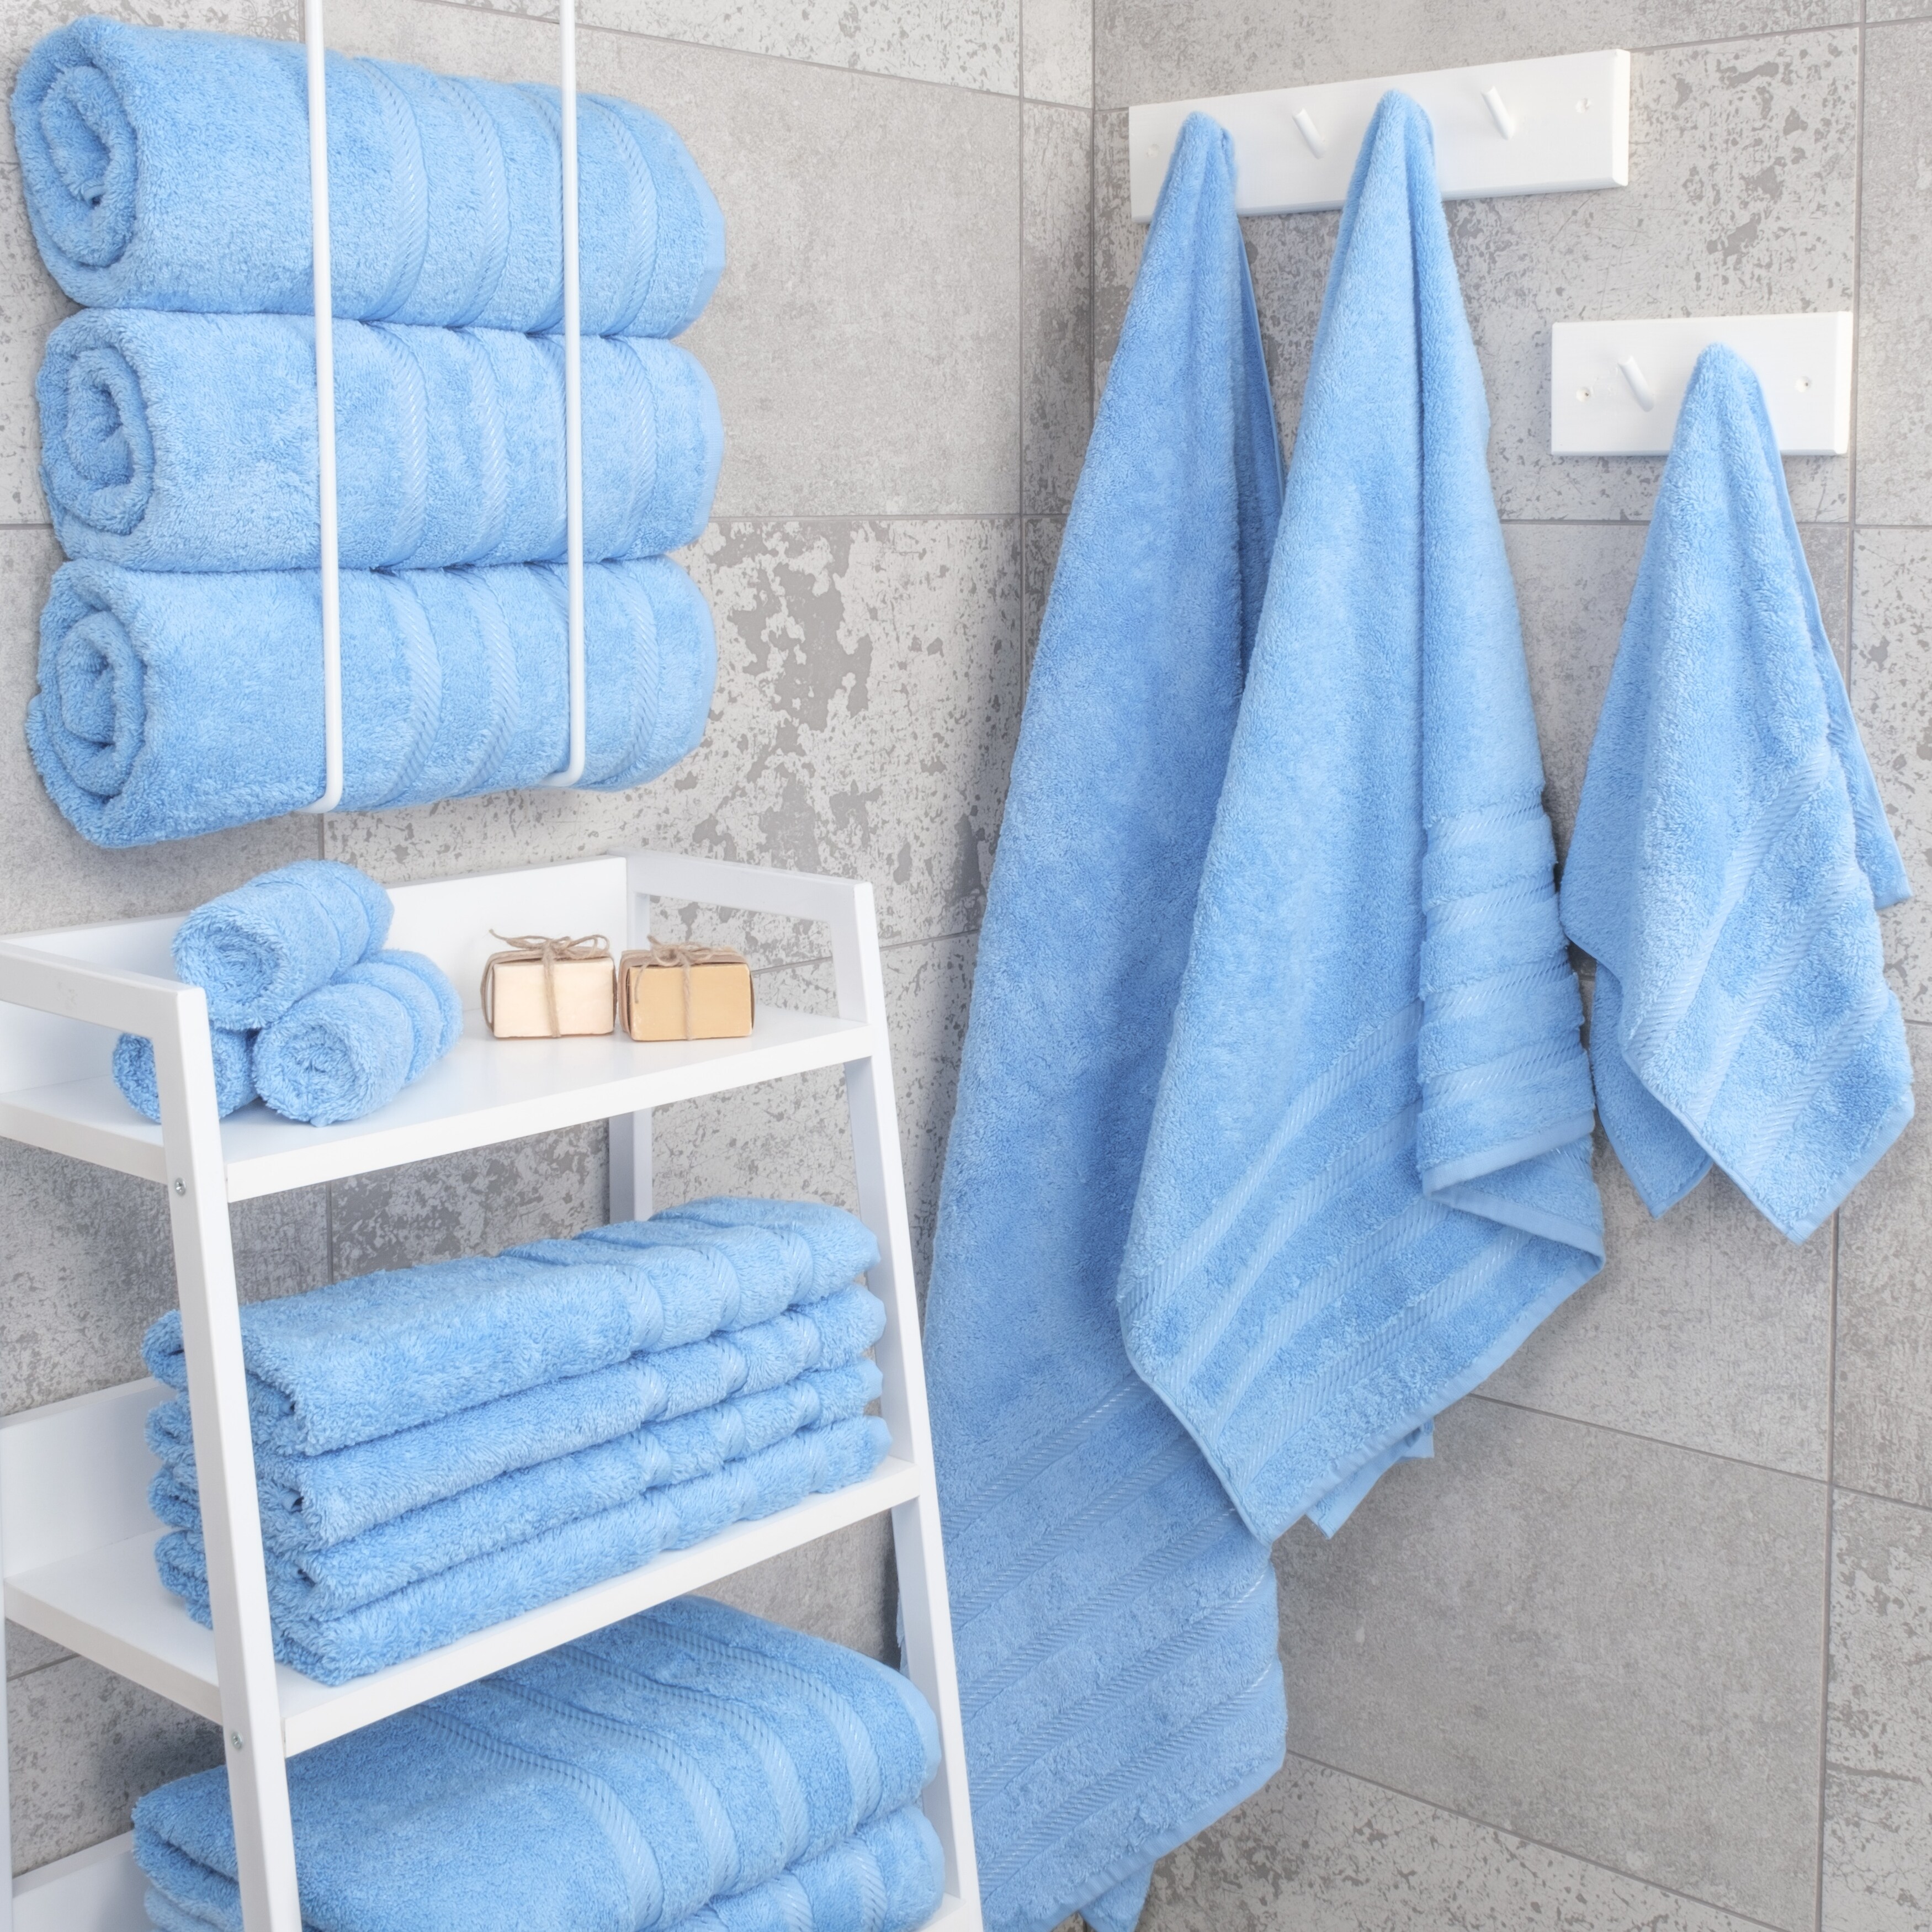 https://ak1.ostkcdn.com/images/products/is/images/direct/4a575fd3a0465671674f4b9b52dfebc5e9e67ab3/American-Soft-Linen-Turkish-Cotton-4-Piece-Bath-Towel-Set.jpg